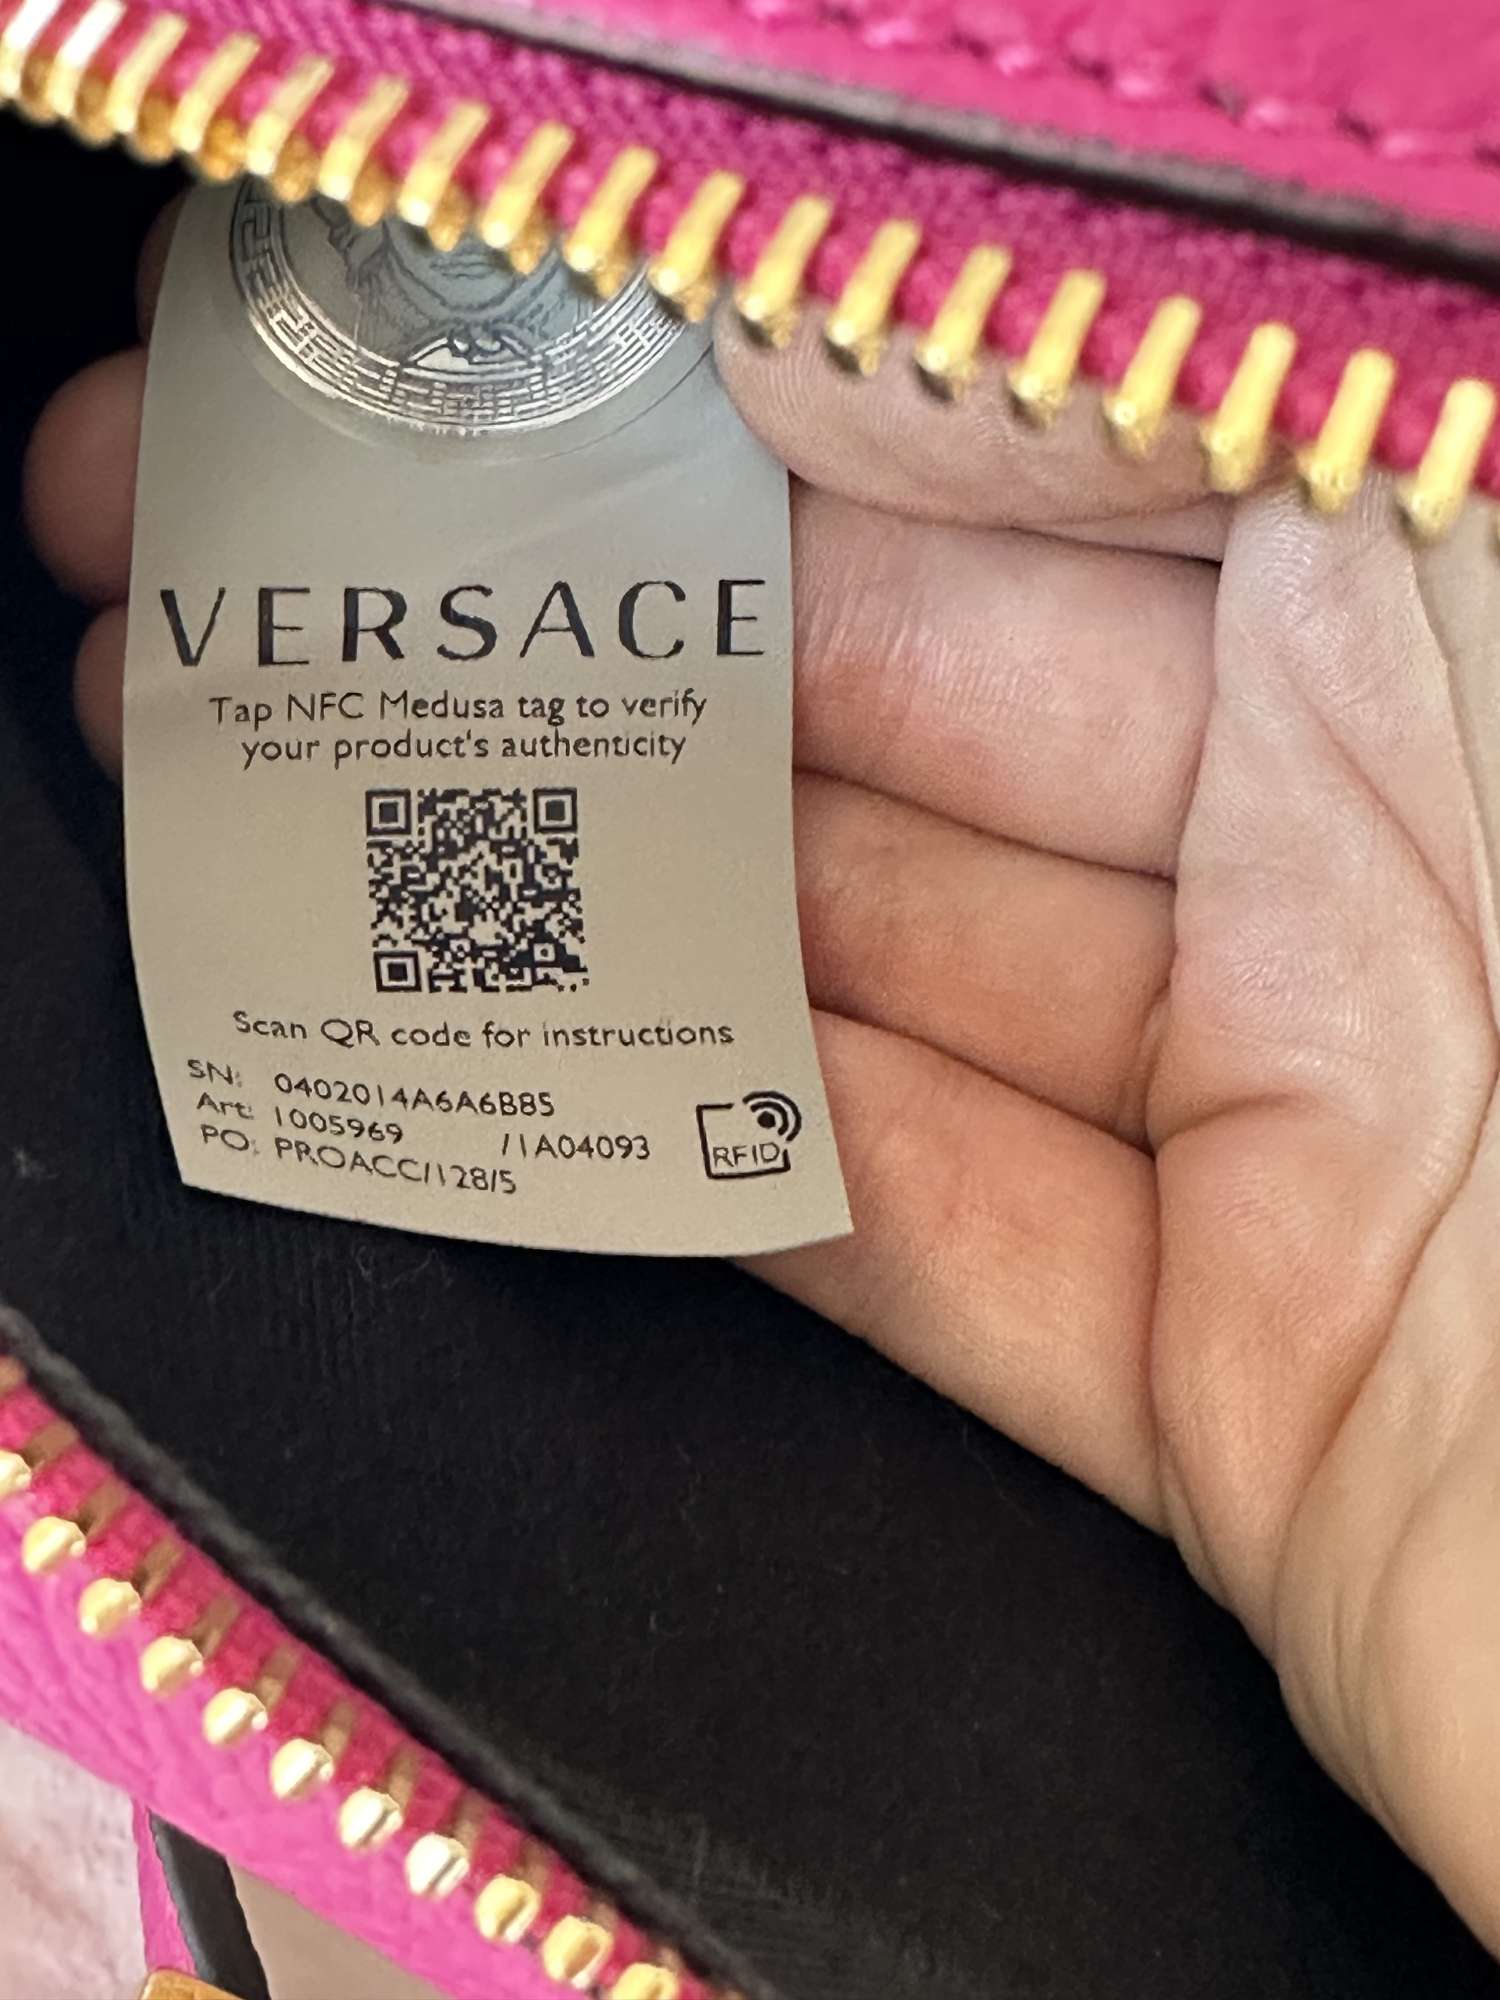 Versace virtus camera bag